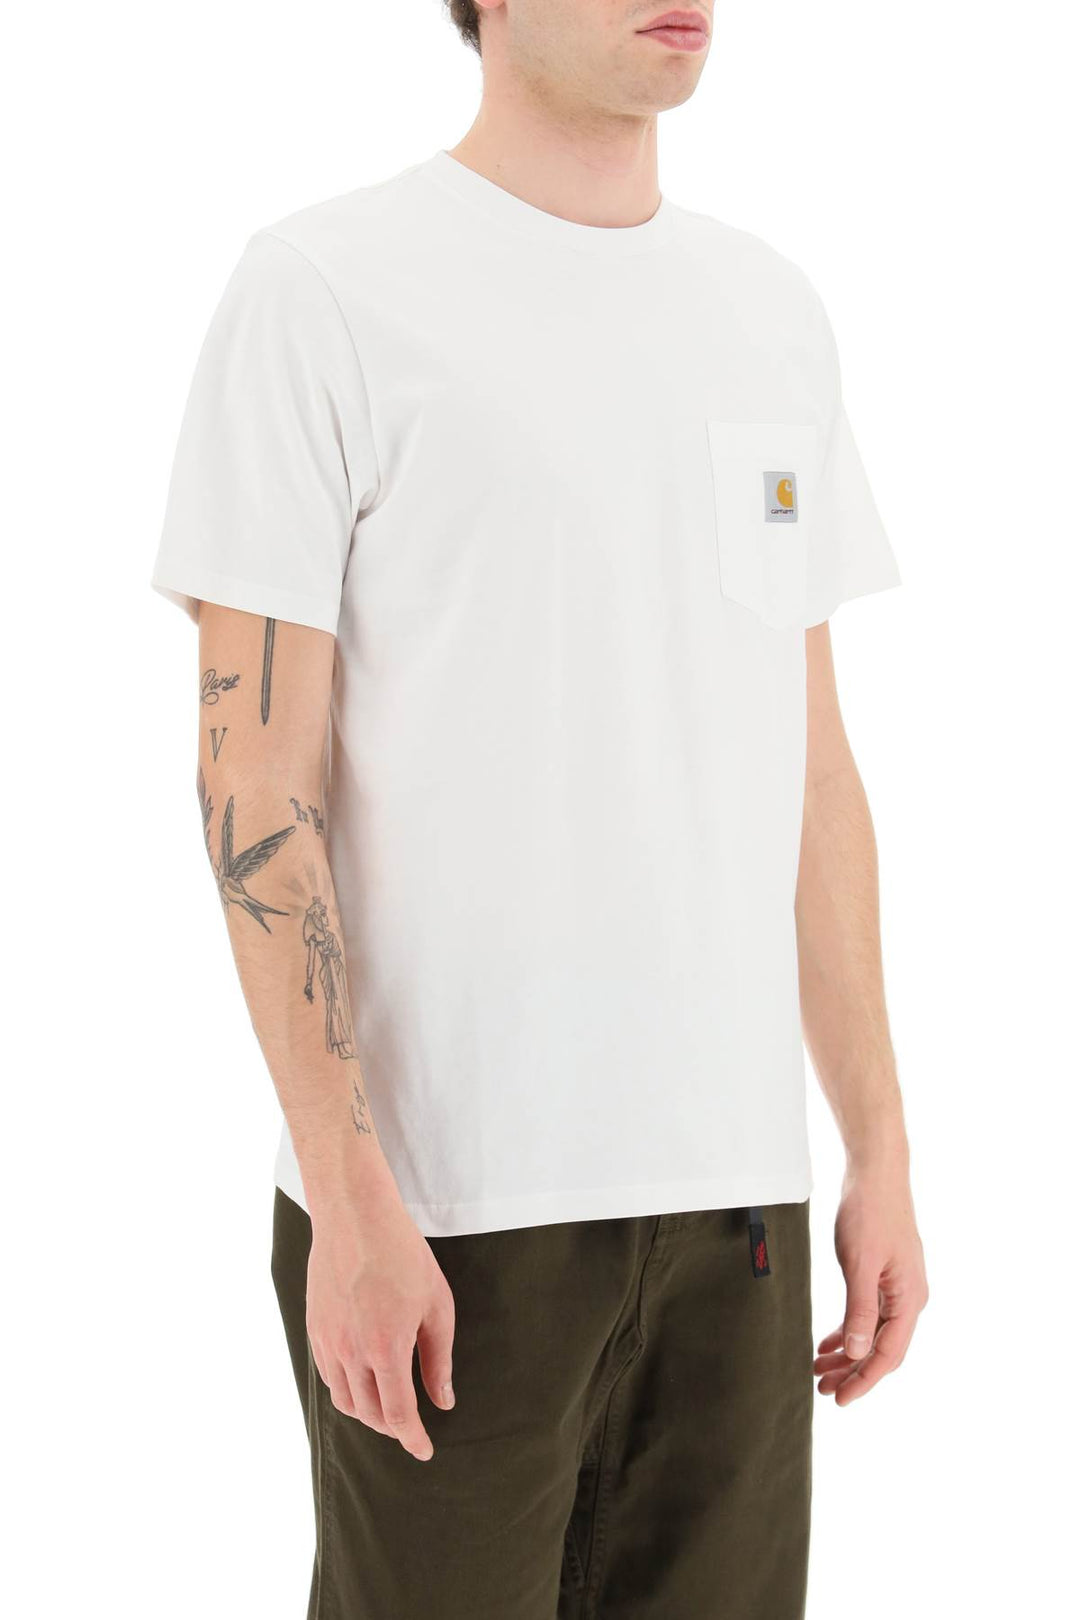 T Shirt 'Pocket' Con Etichetta Logo - Carhartt Wip - Uomo